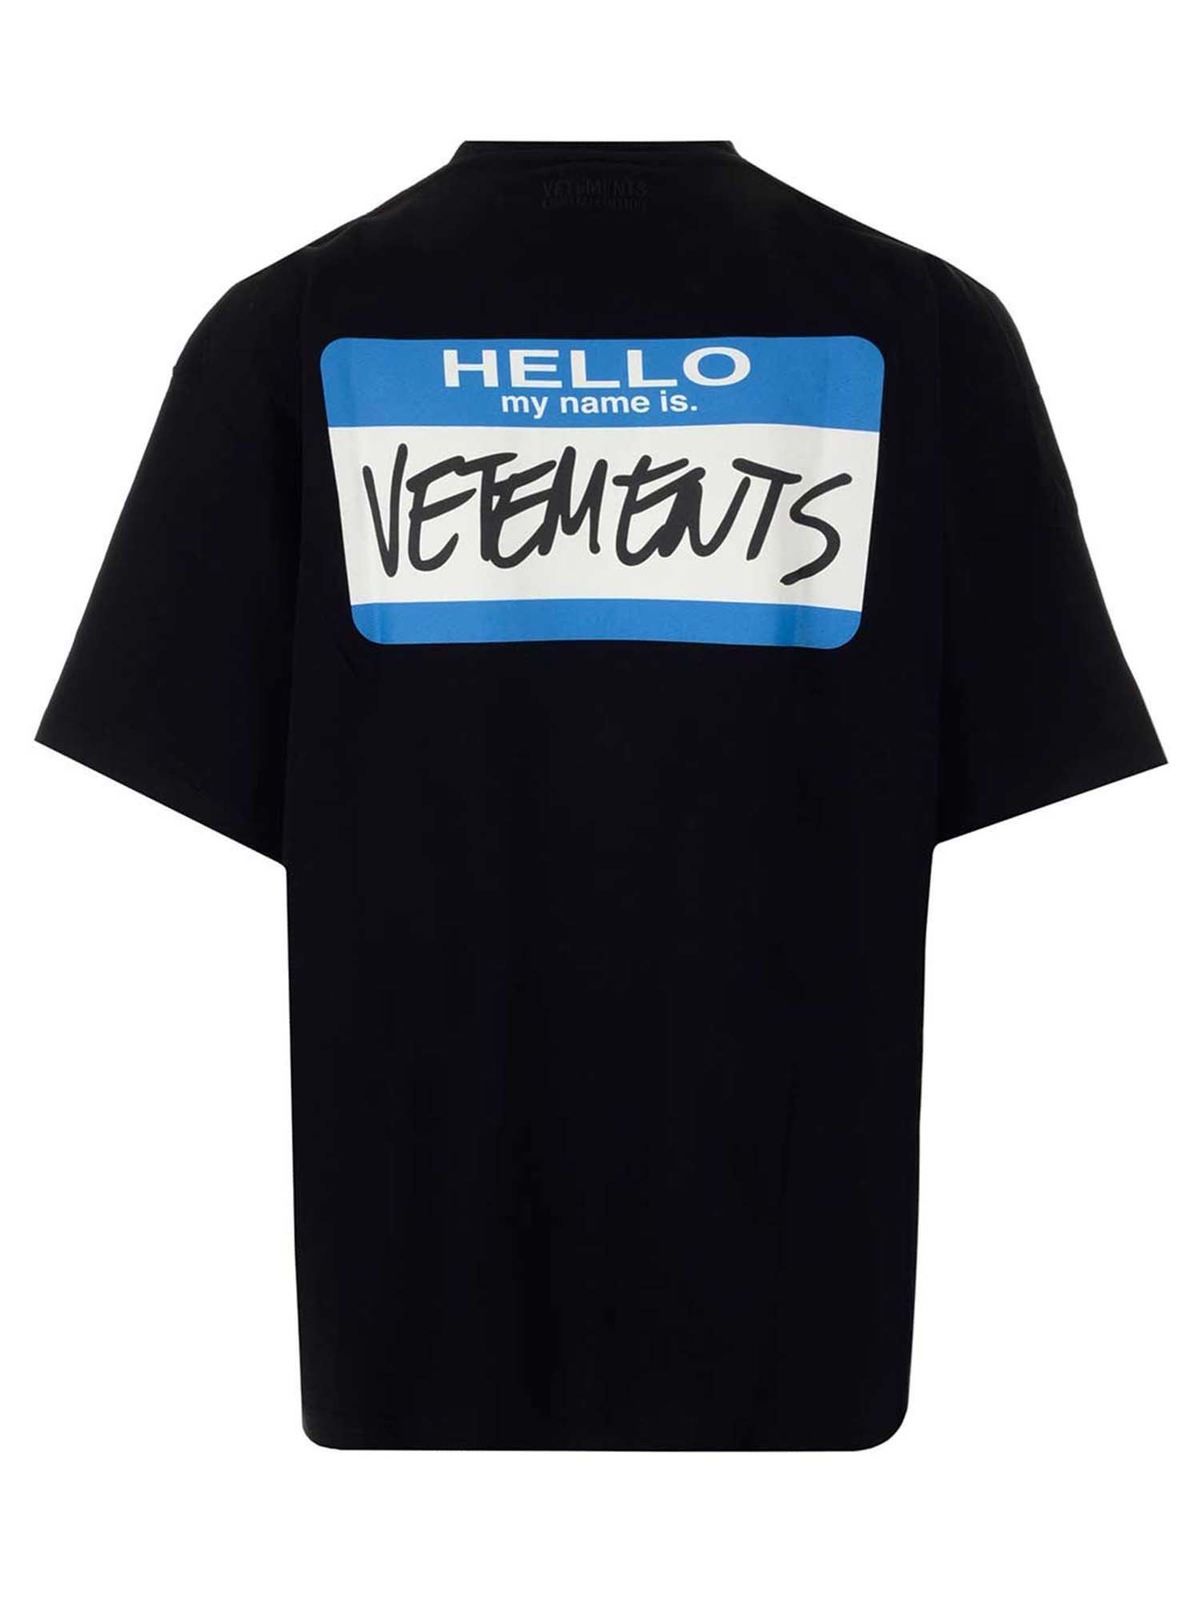 Tシャツ Vetements - Tシャツ - 黒 - UA52TR330BBLACK | THEBS [iKRIX]